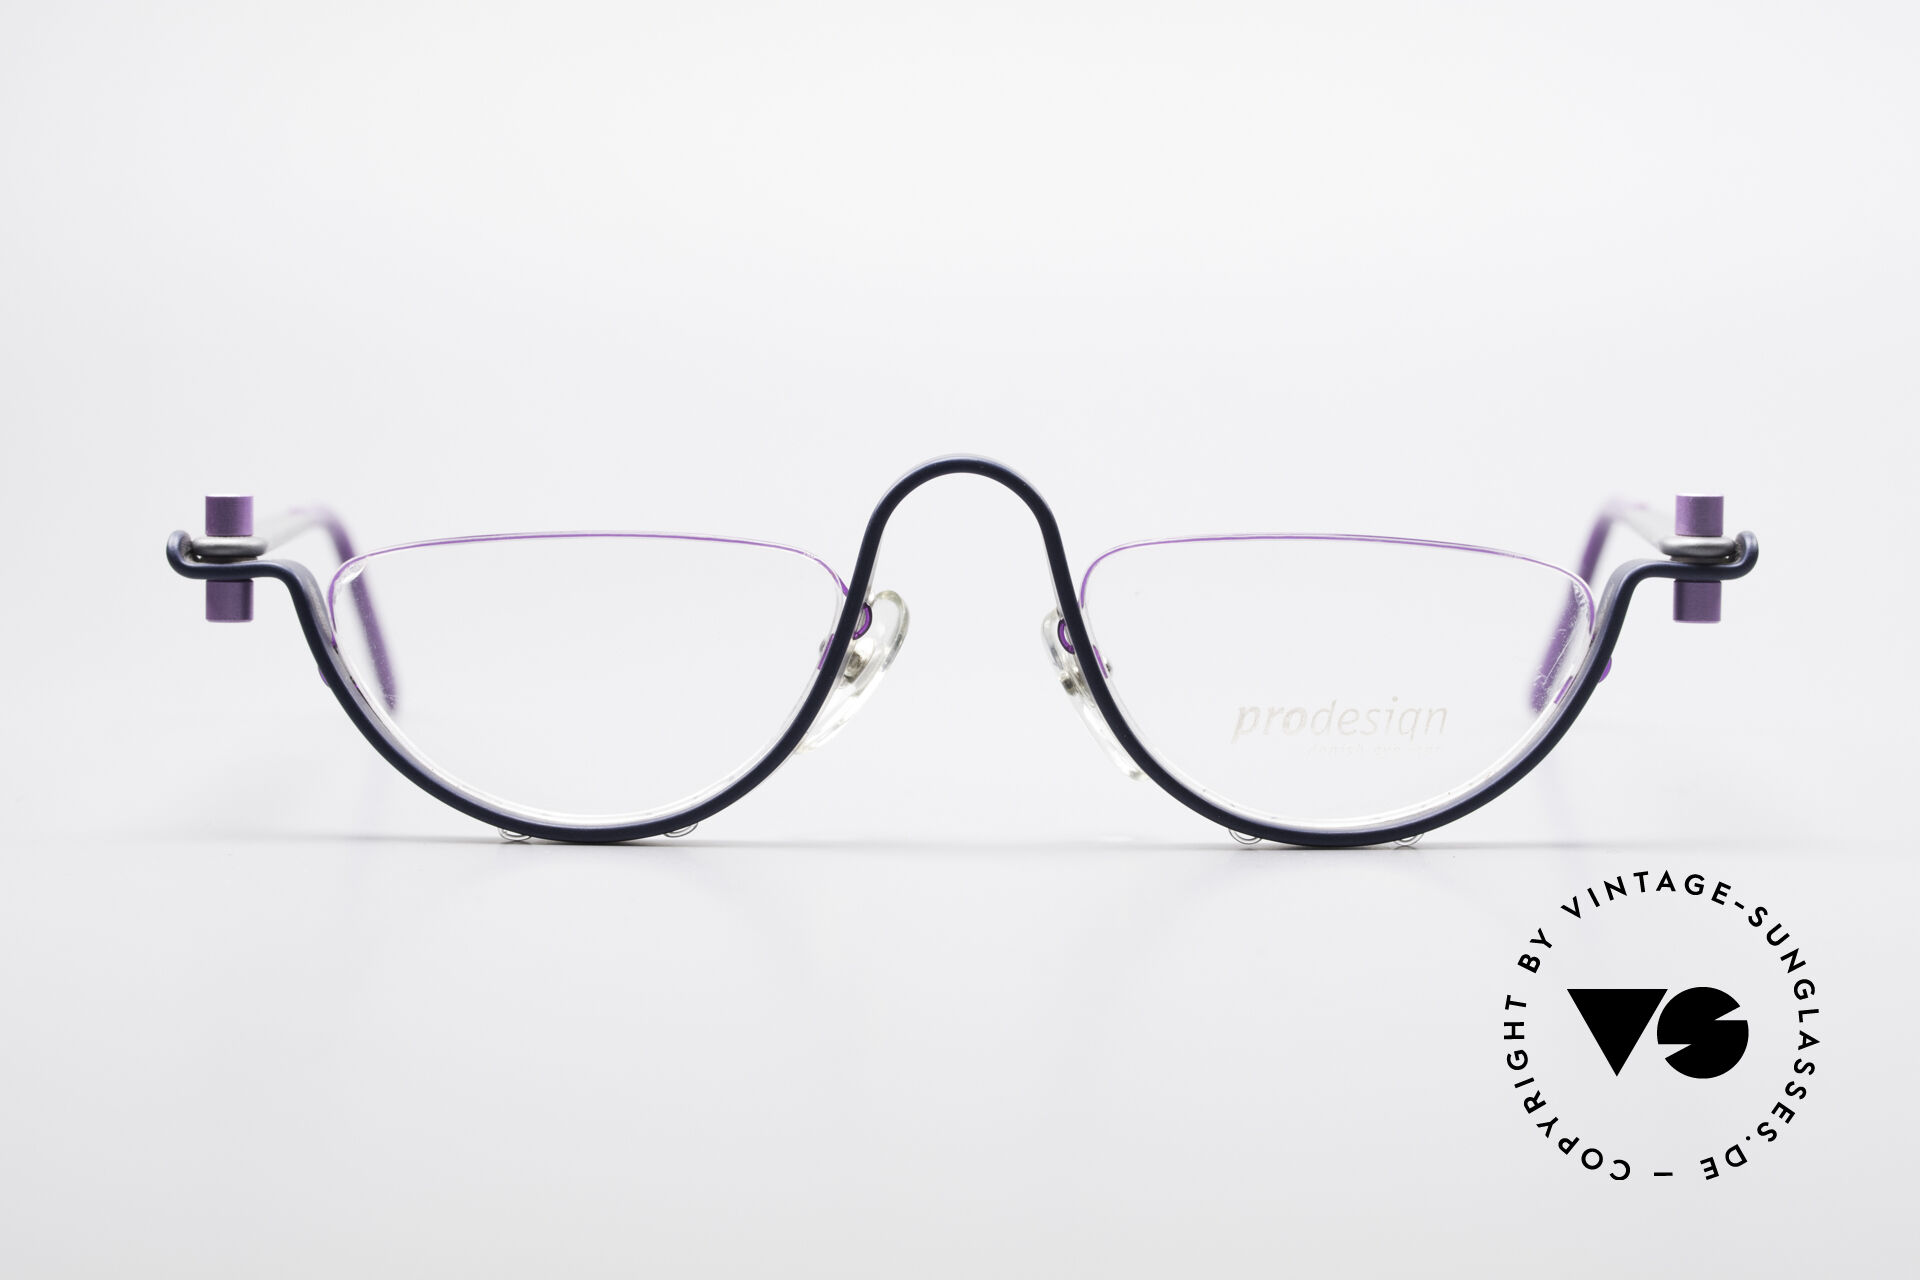 Glasses Prodesign No1 Half Gail Spence Design Glasses